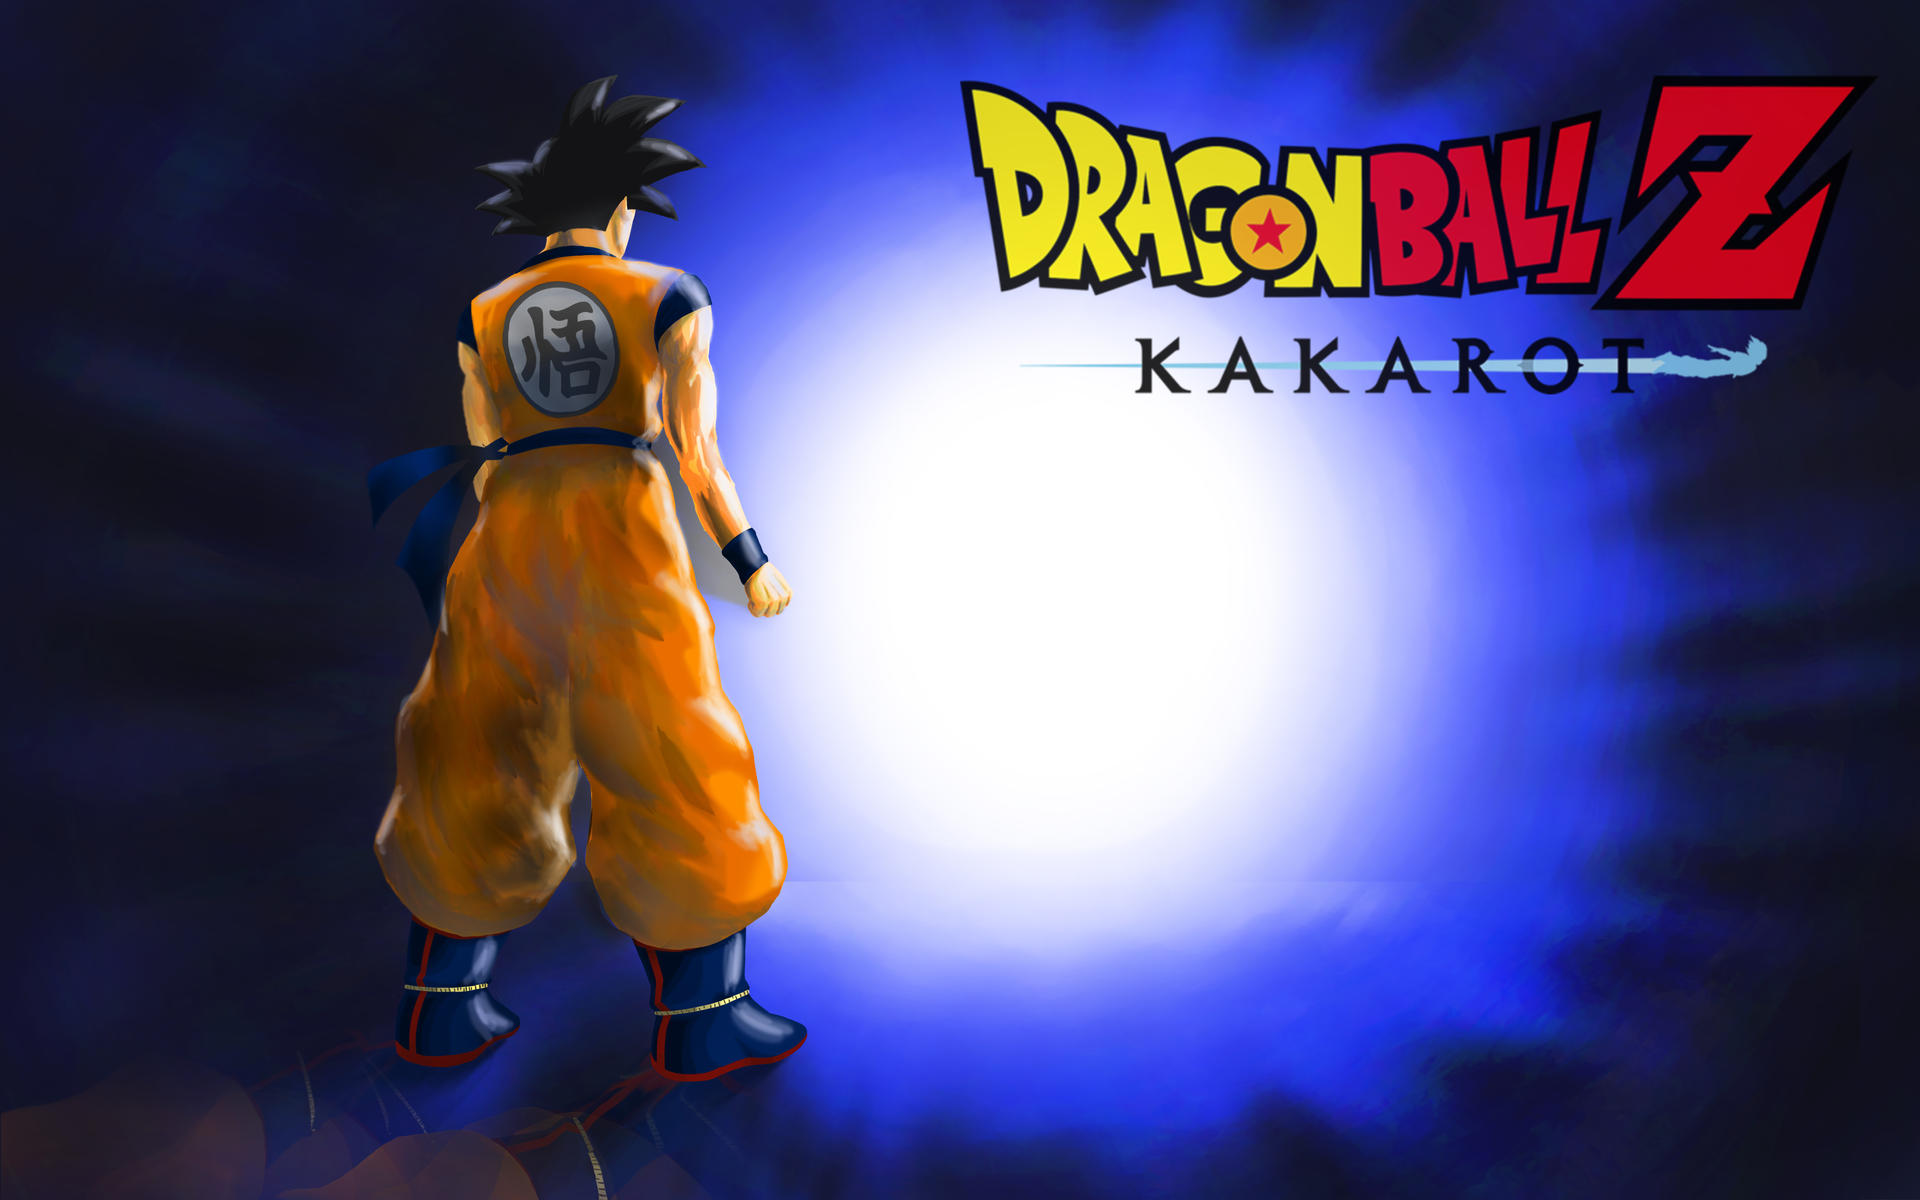 Dragon Ball Z Kakarot fanart by Obinata98 on DeviantArt